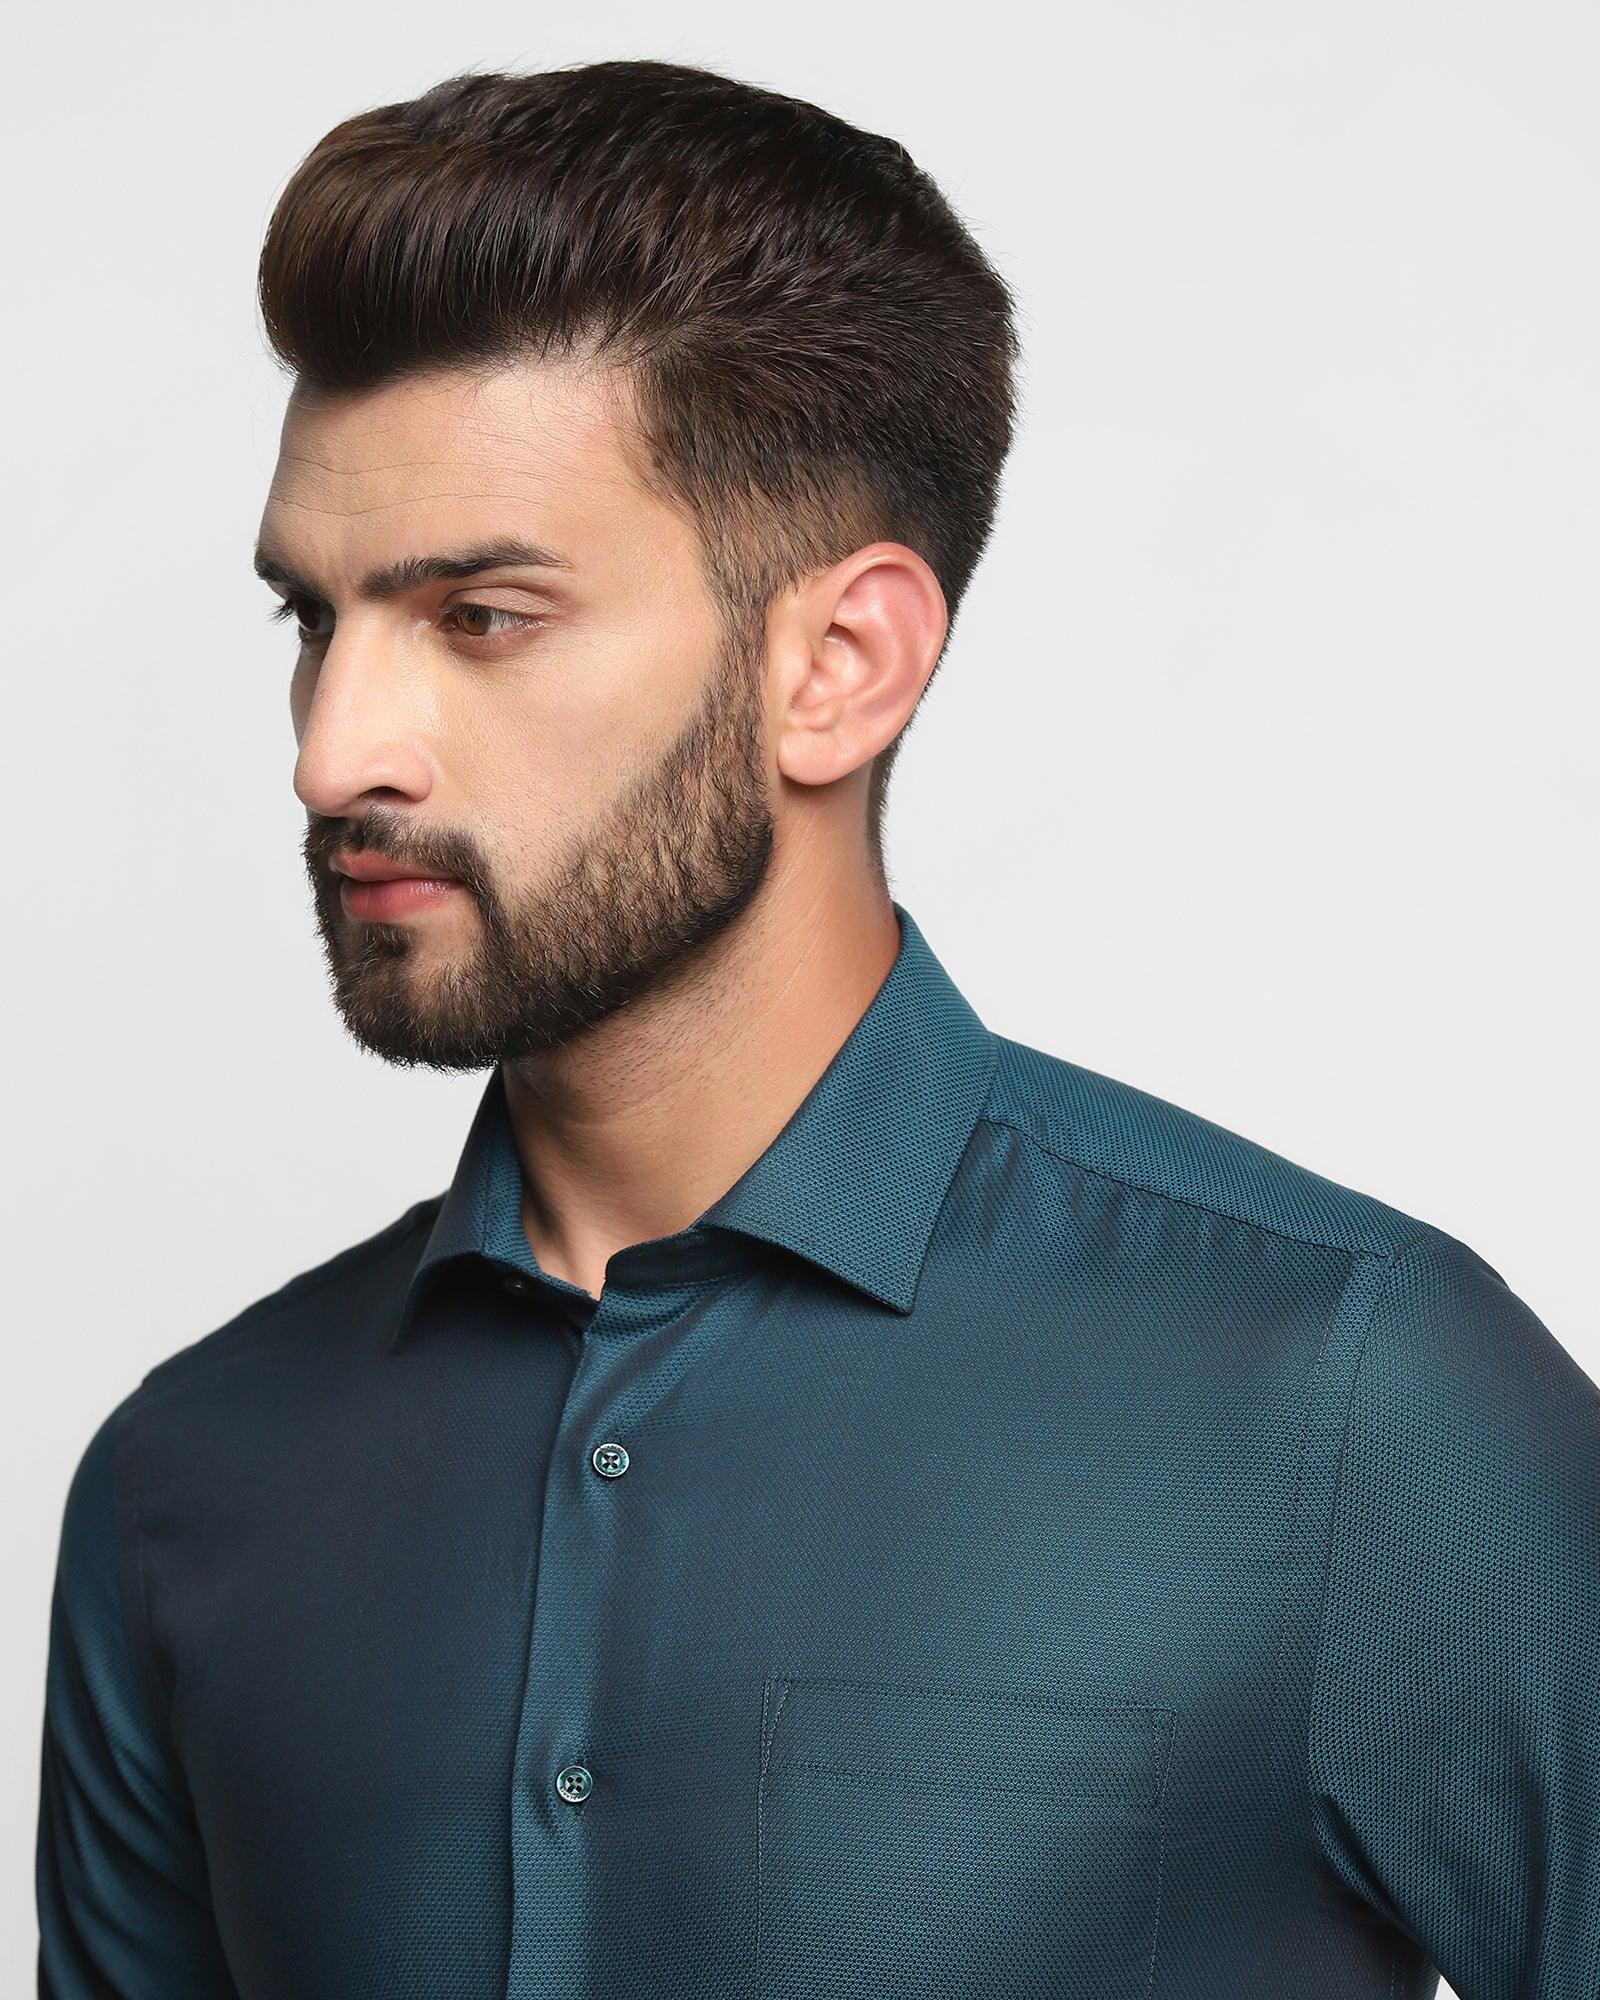 Formal Green Textured Shirt - Zurik